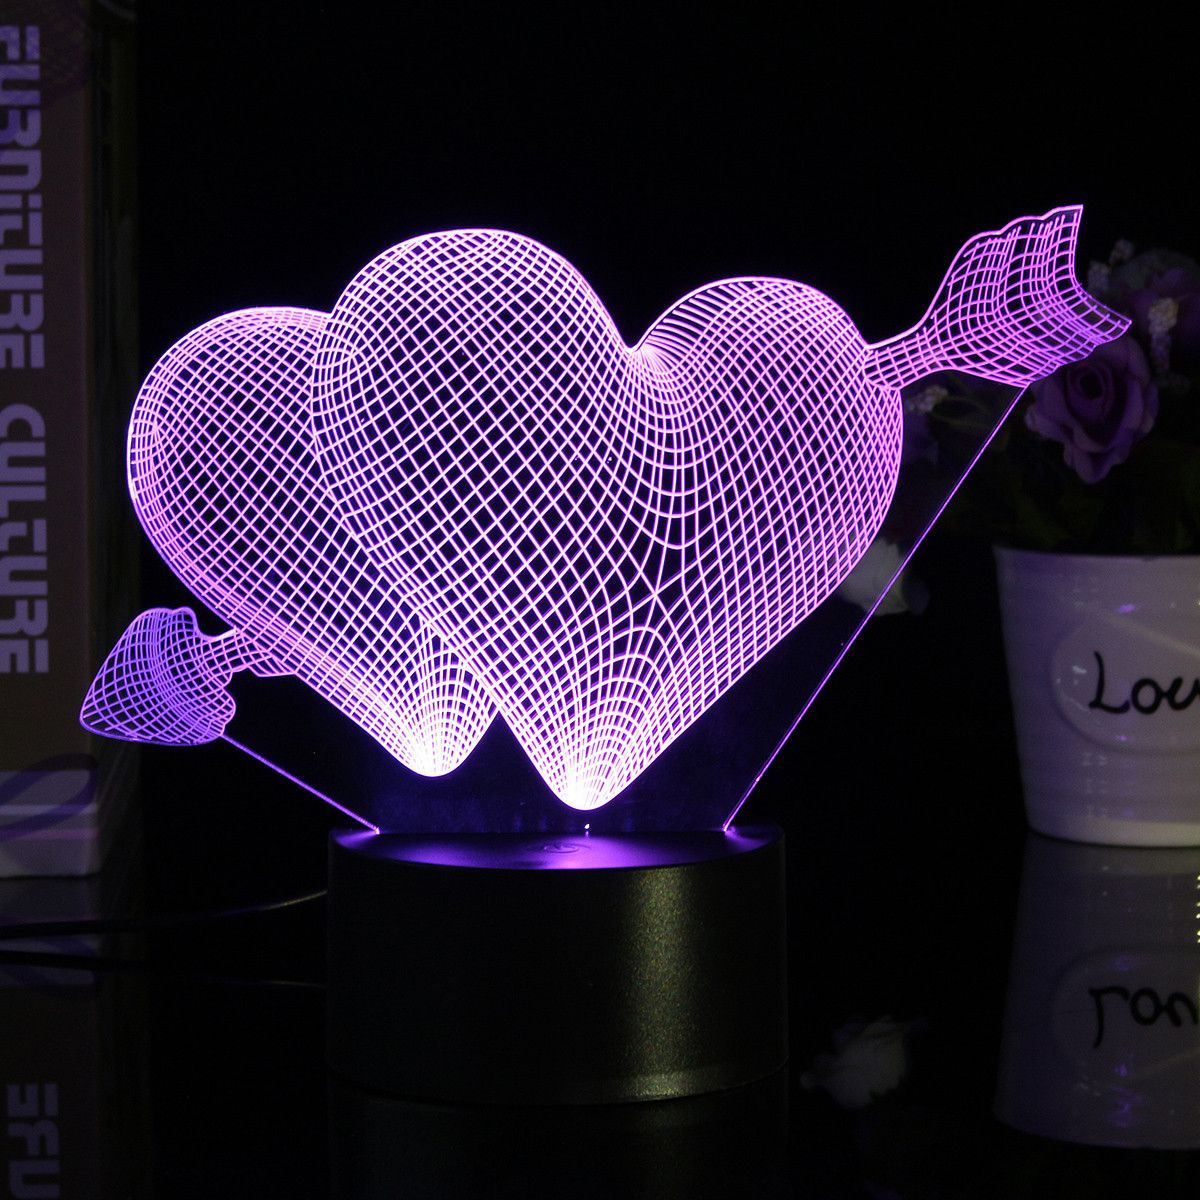 Love-Arrow-3D-Desk-Table-Lamp-7-Color-Change-LED-Night-Light-Party-Decor-Gift-1106455